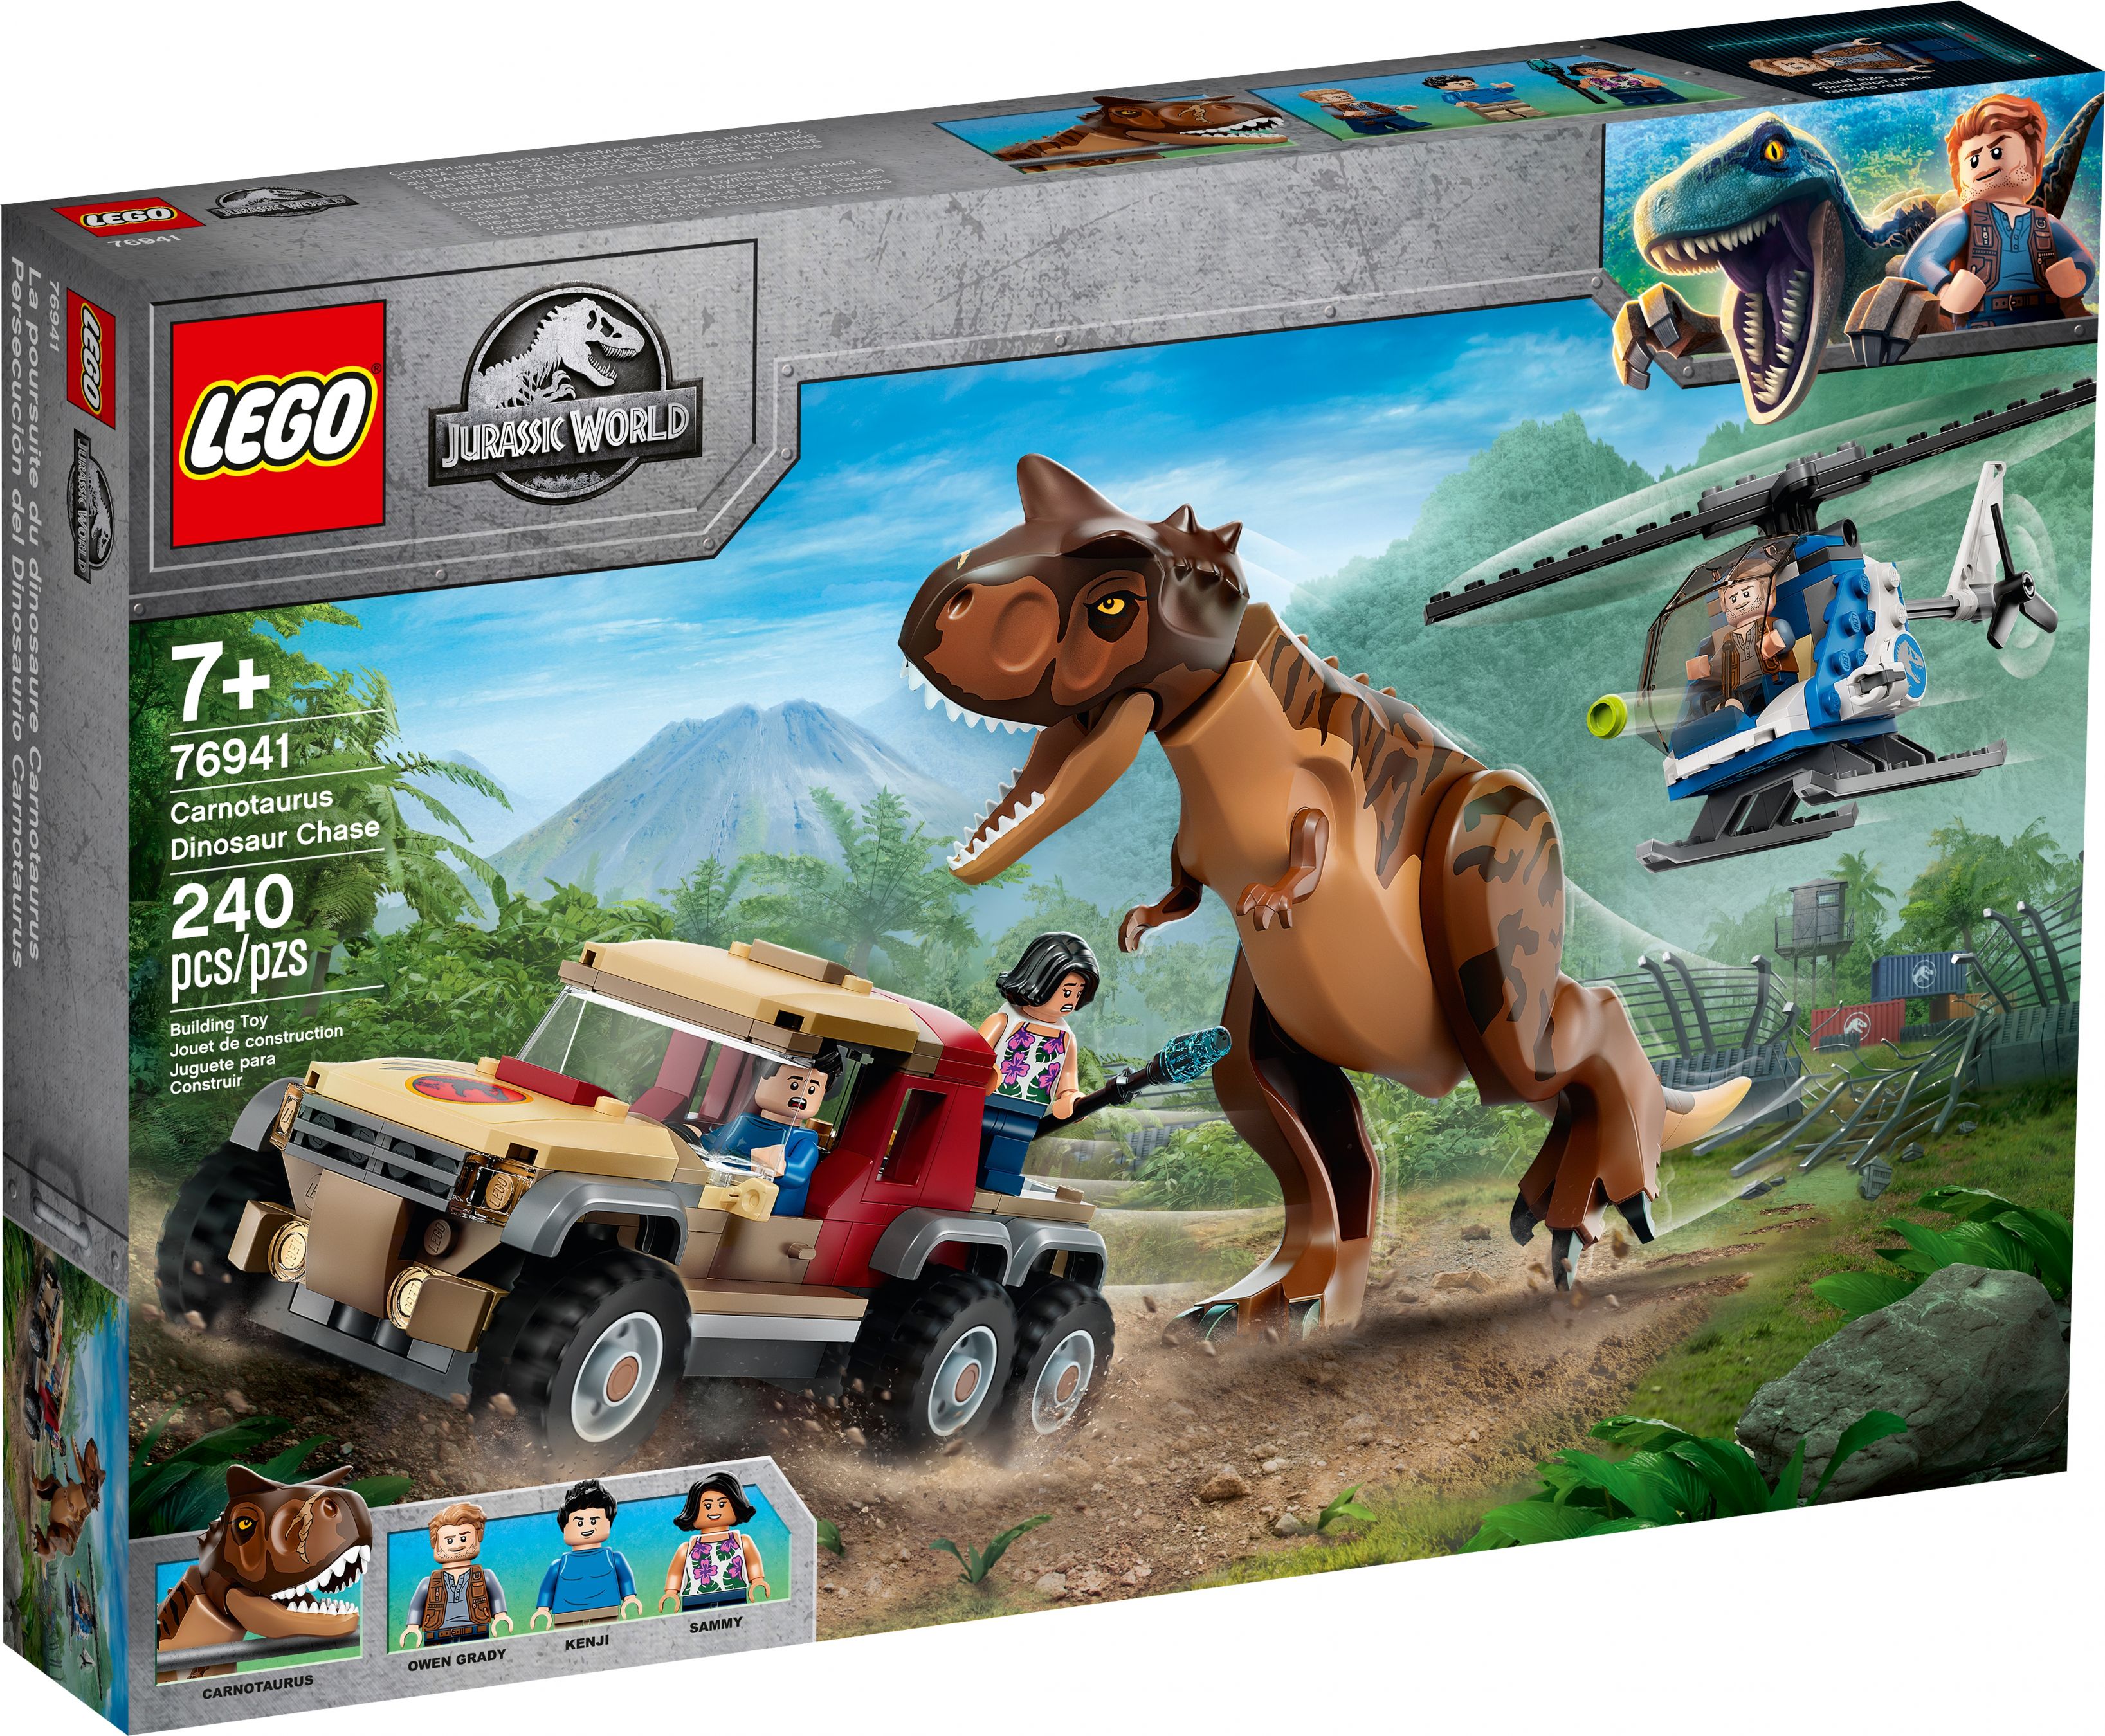 LEGO Jurassic World 76941 Verfolgung des Carnotaurus LEGO_76941_alt1.jpg